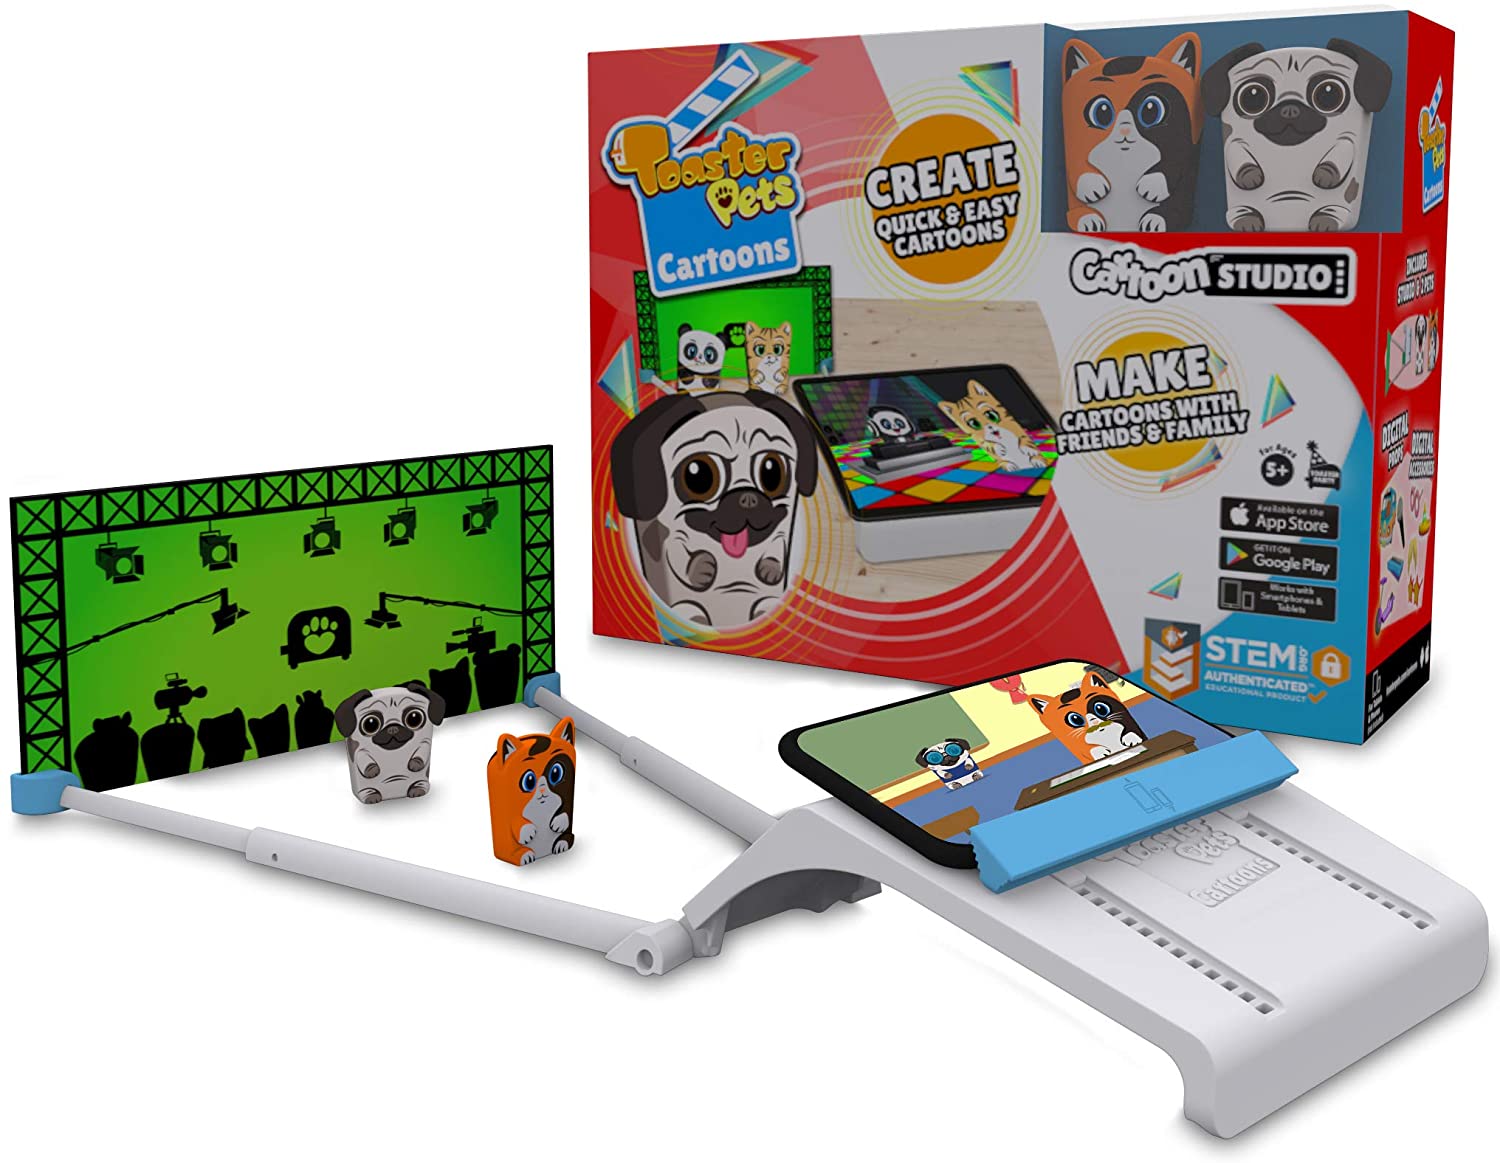 Toaster Pets Cartoons Studio kit